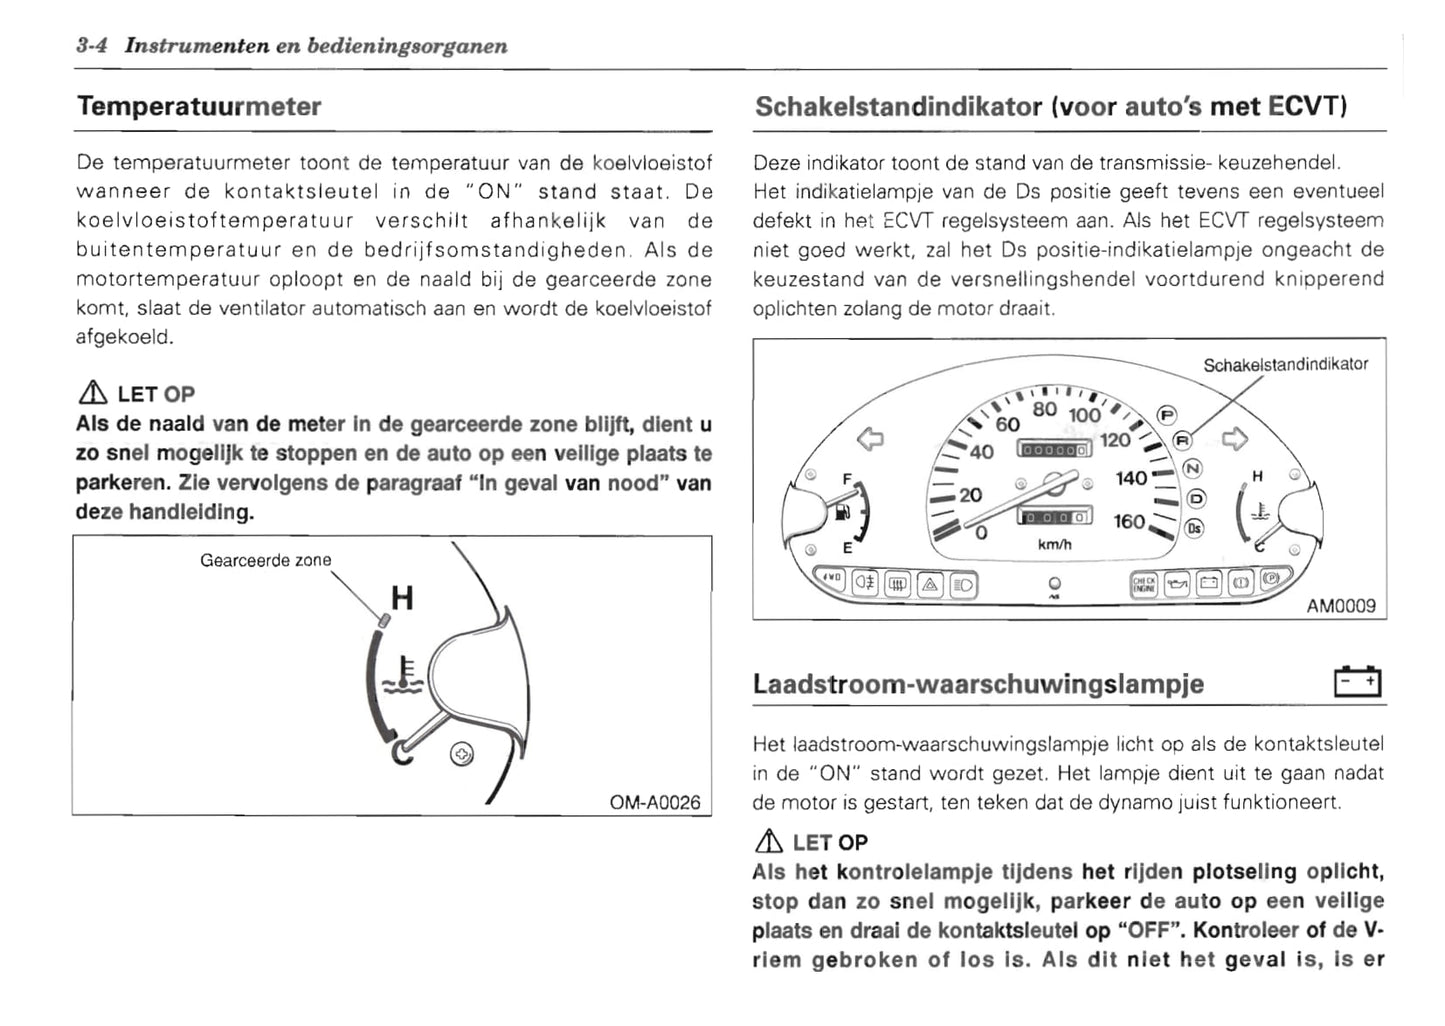 1992-2000 Subaru Vivio Gebruikershandleiding | Nederlands